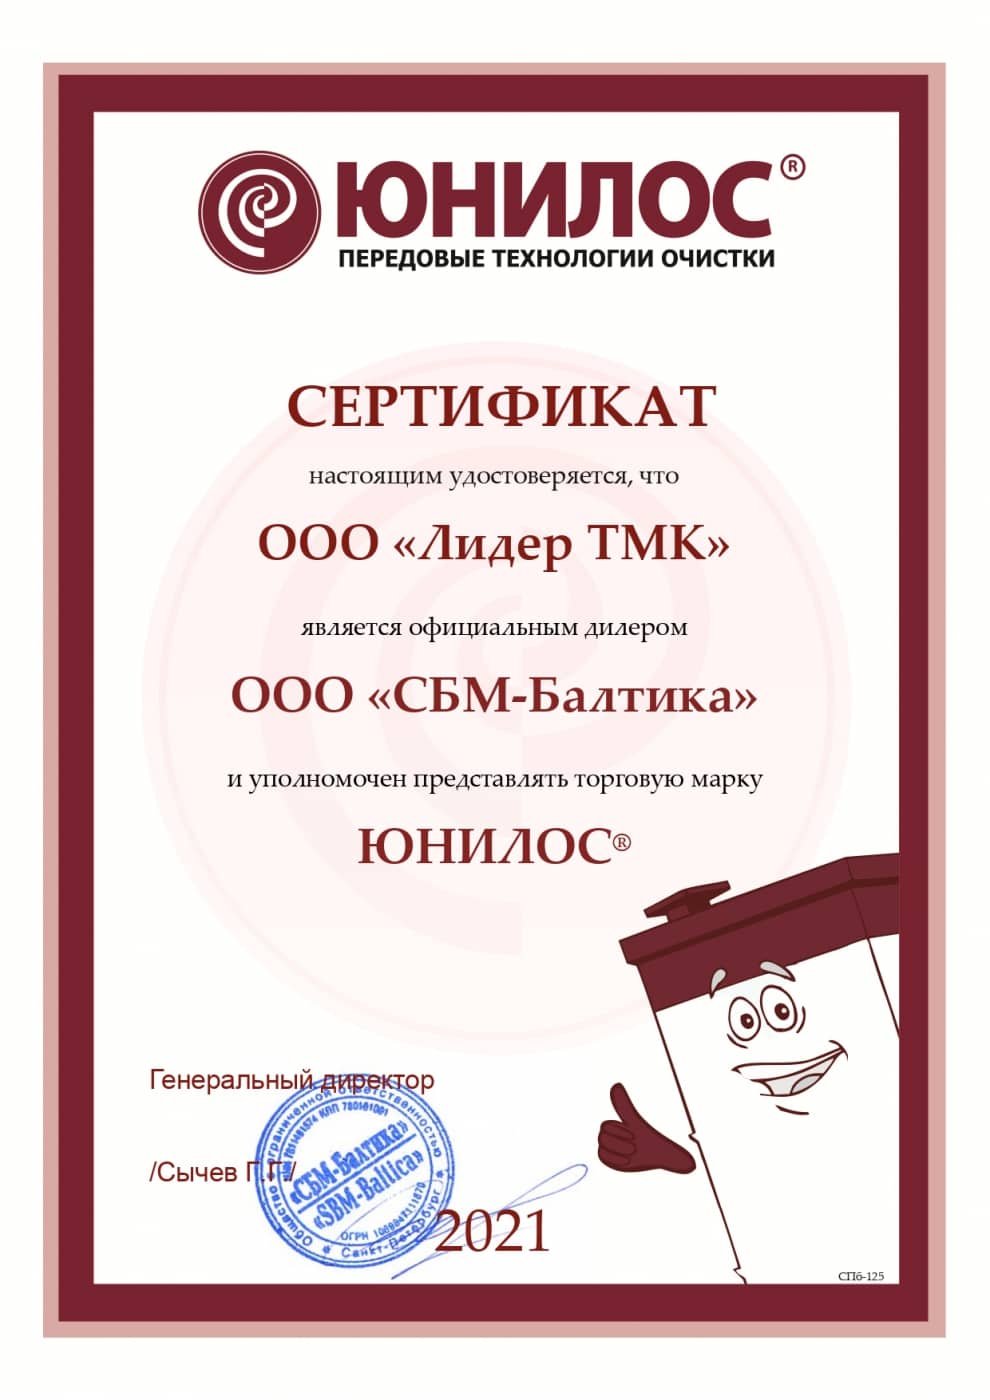 Септик Астра ДАБЛ 7 прин. сертификат